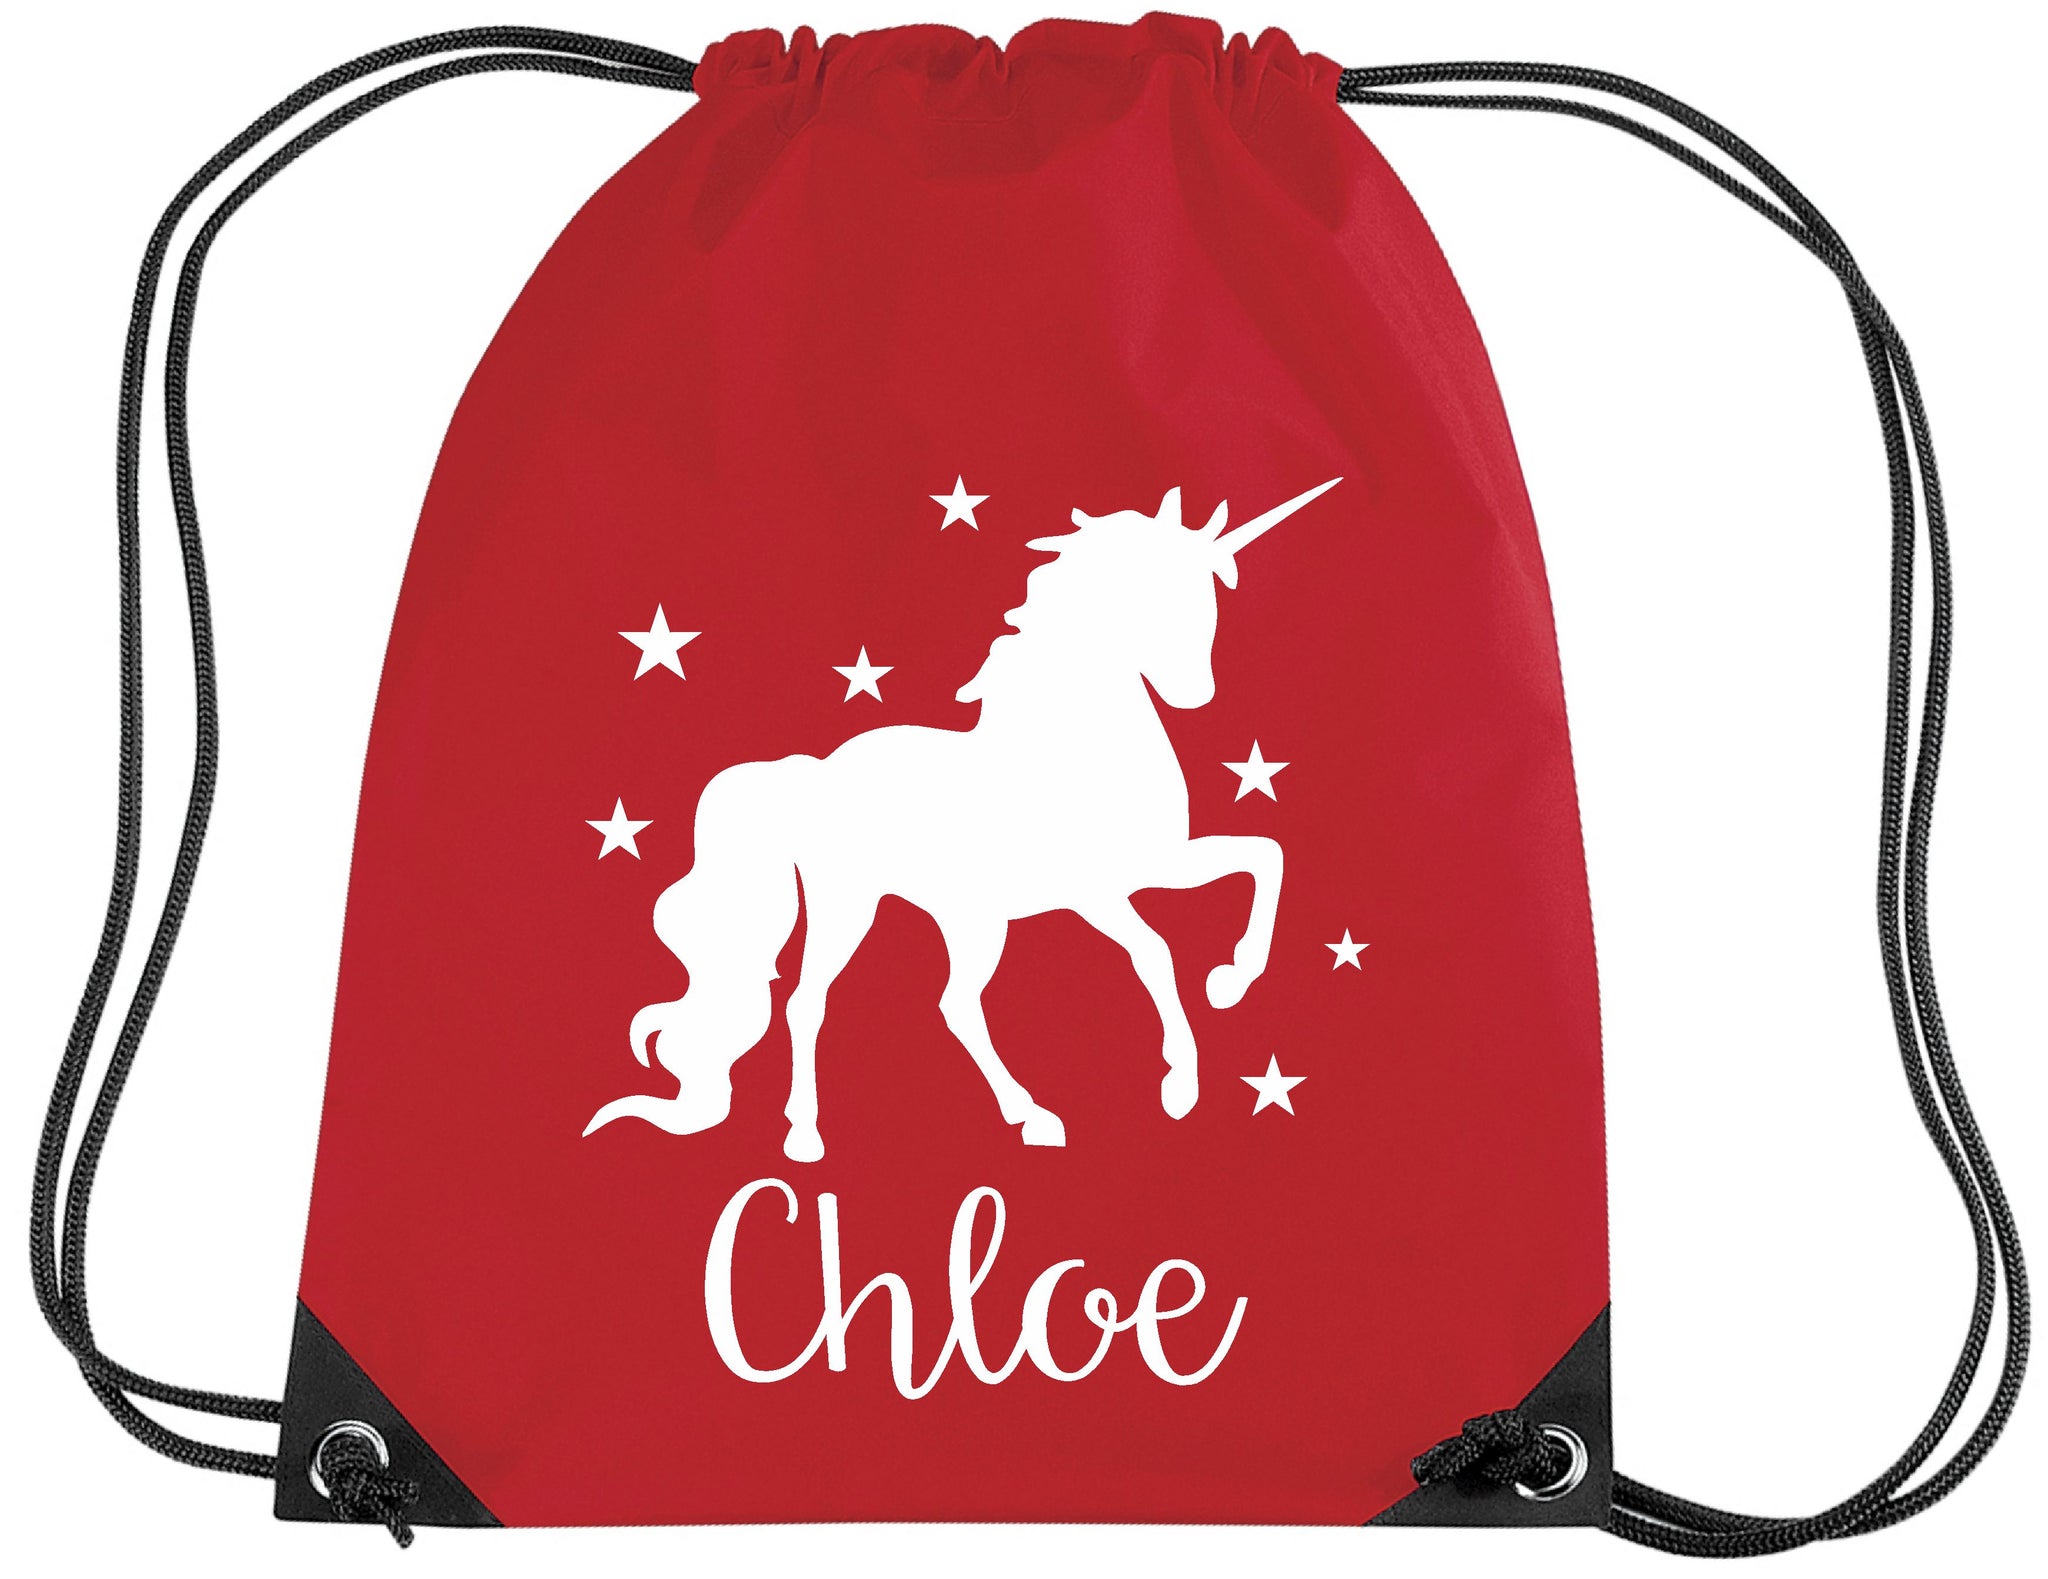 Personalised Unicorn with Stars Drawstring Bag